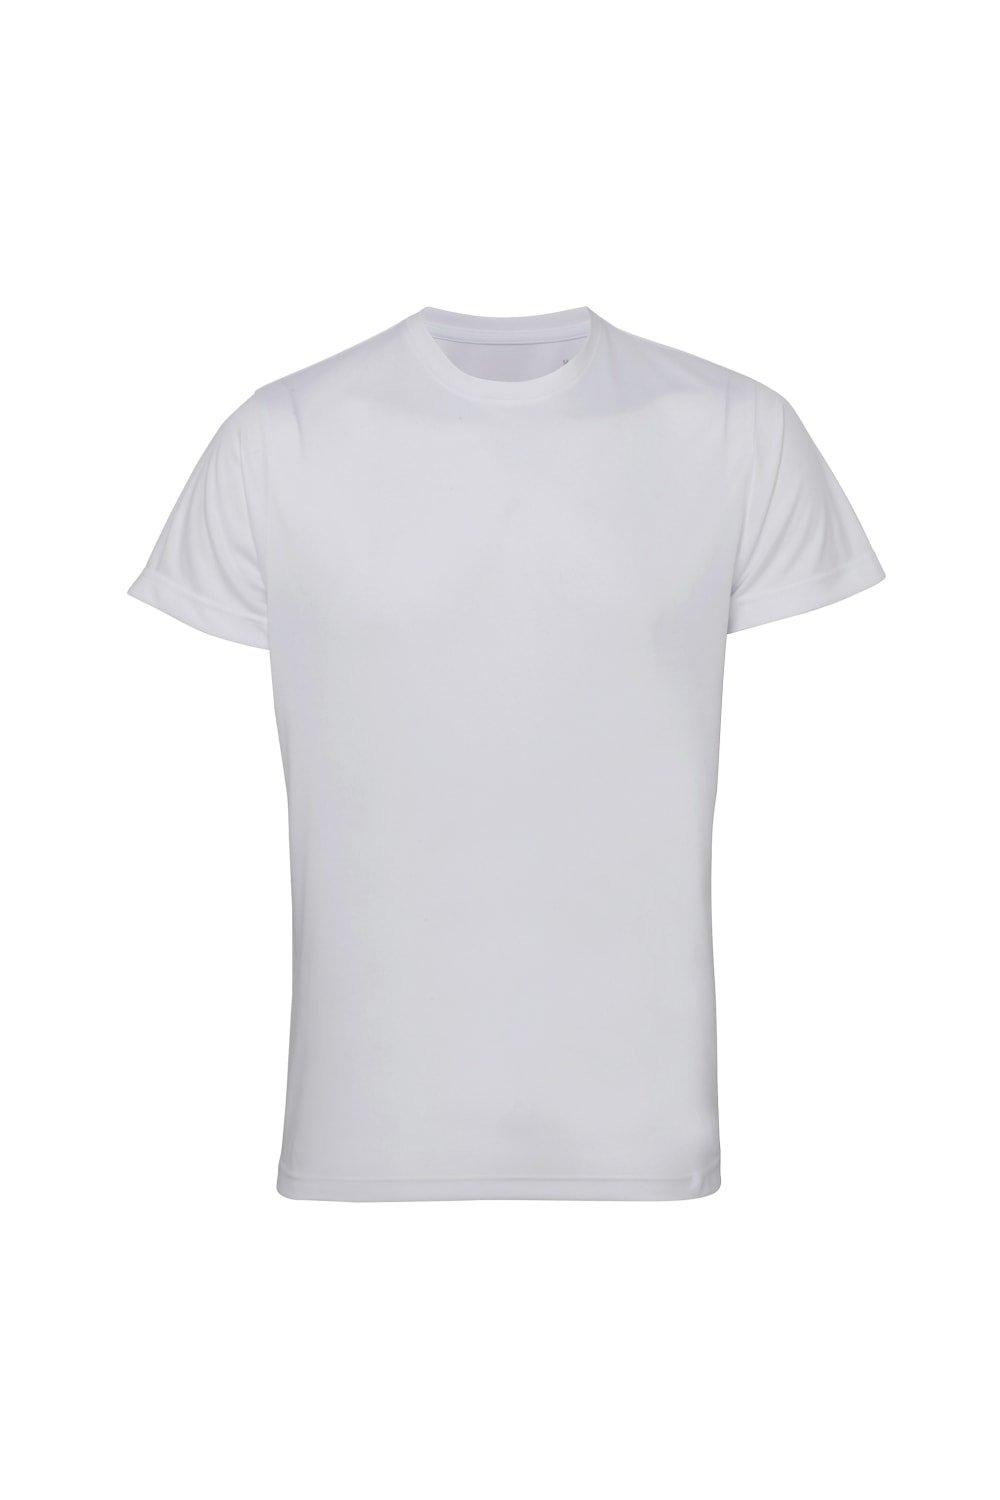 Легкая футболка для фитнеса Tri Dri с короткими рукавами TriDri, белый мужская футболка ламылав l черный